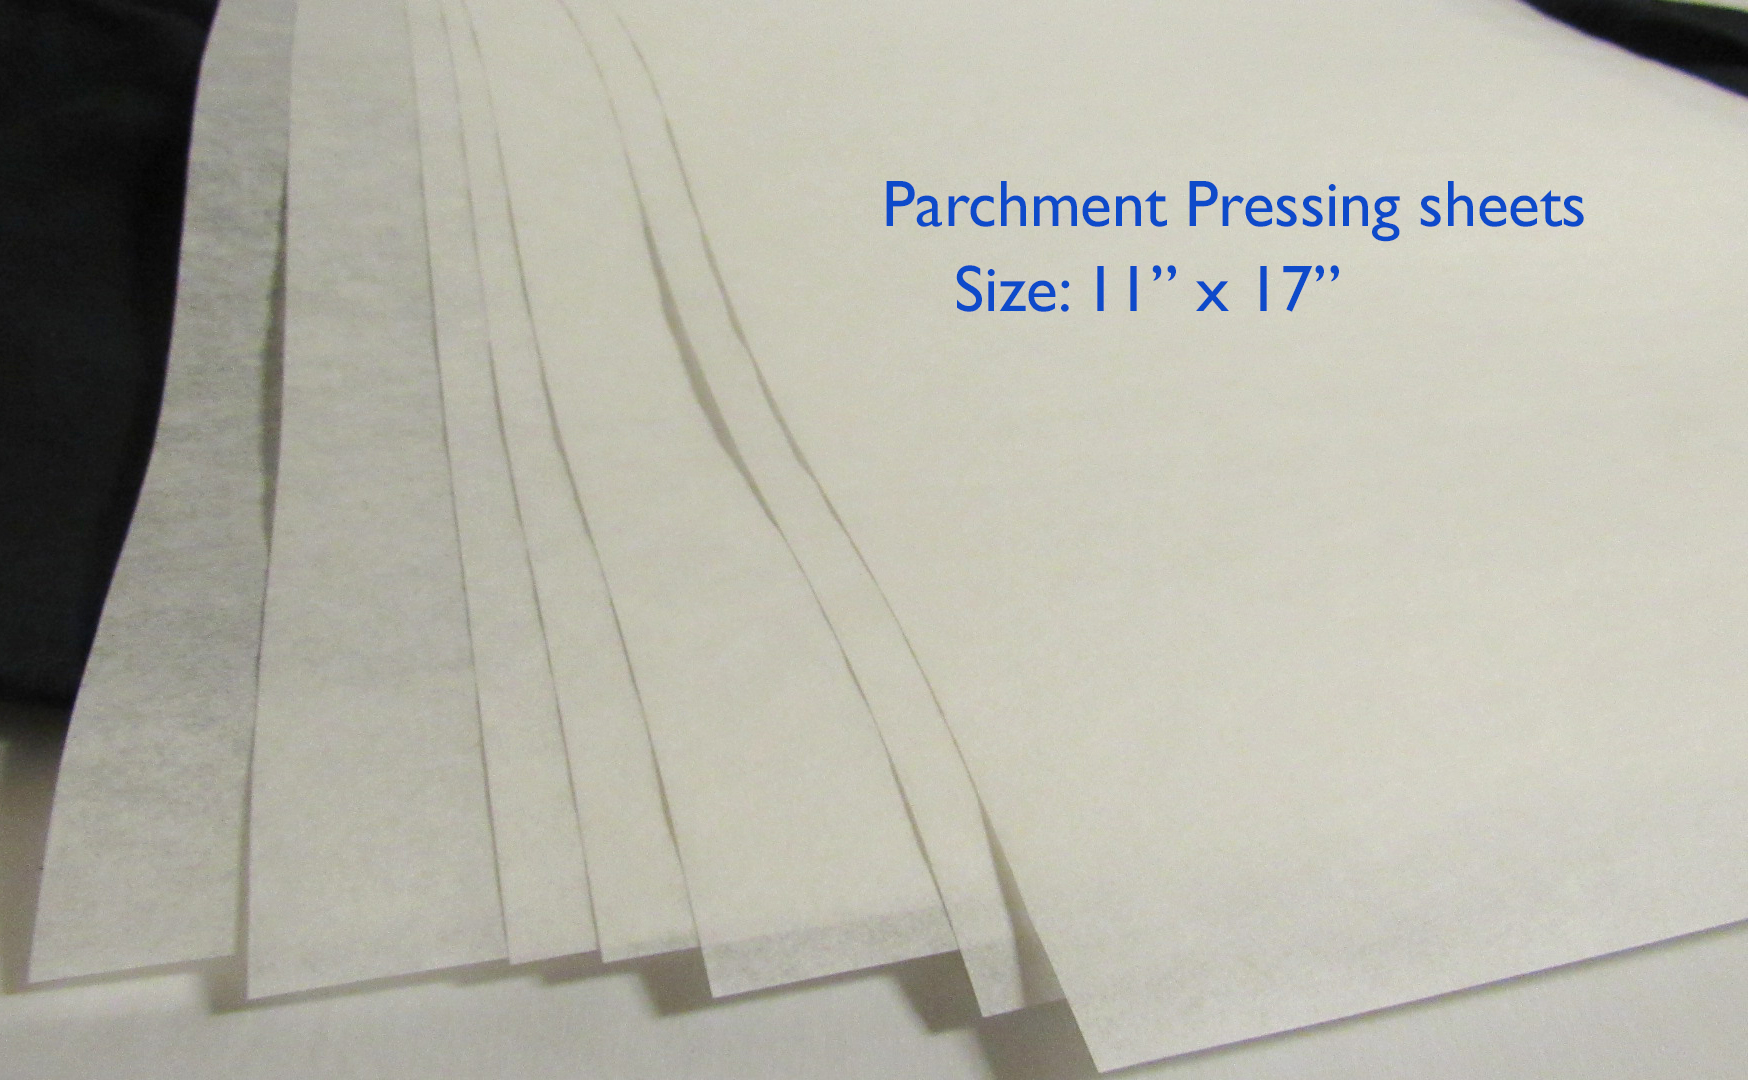 https://awpaper.com/wp-content/uploads/2017/06/Parchment-Pressing-Sheets.jpg